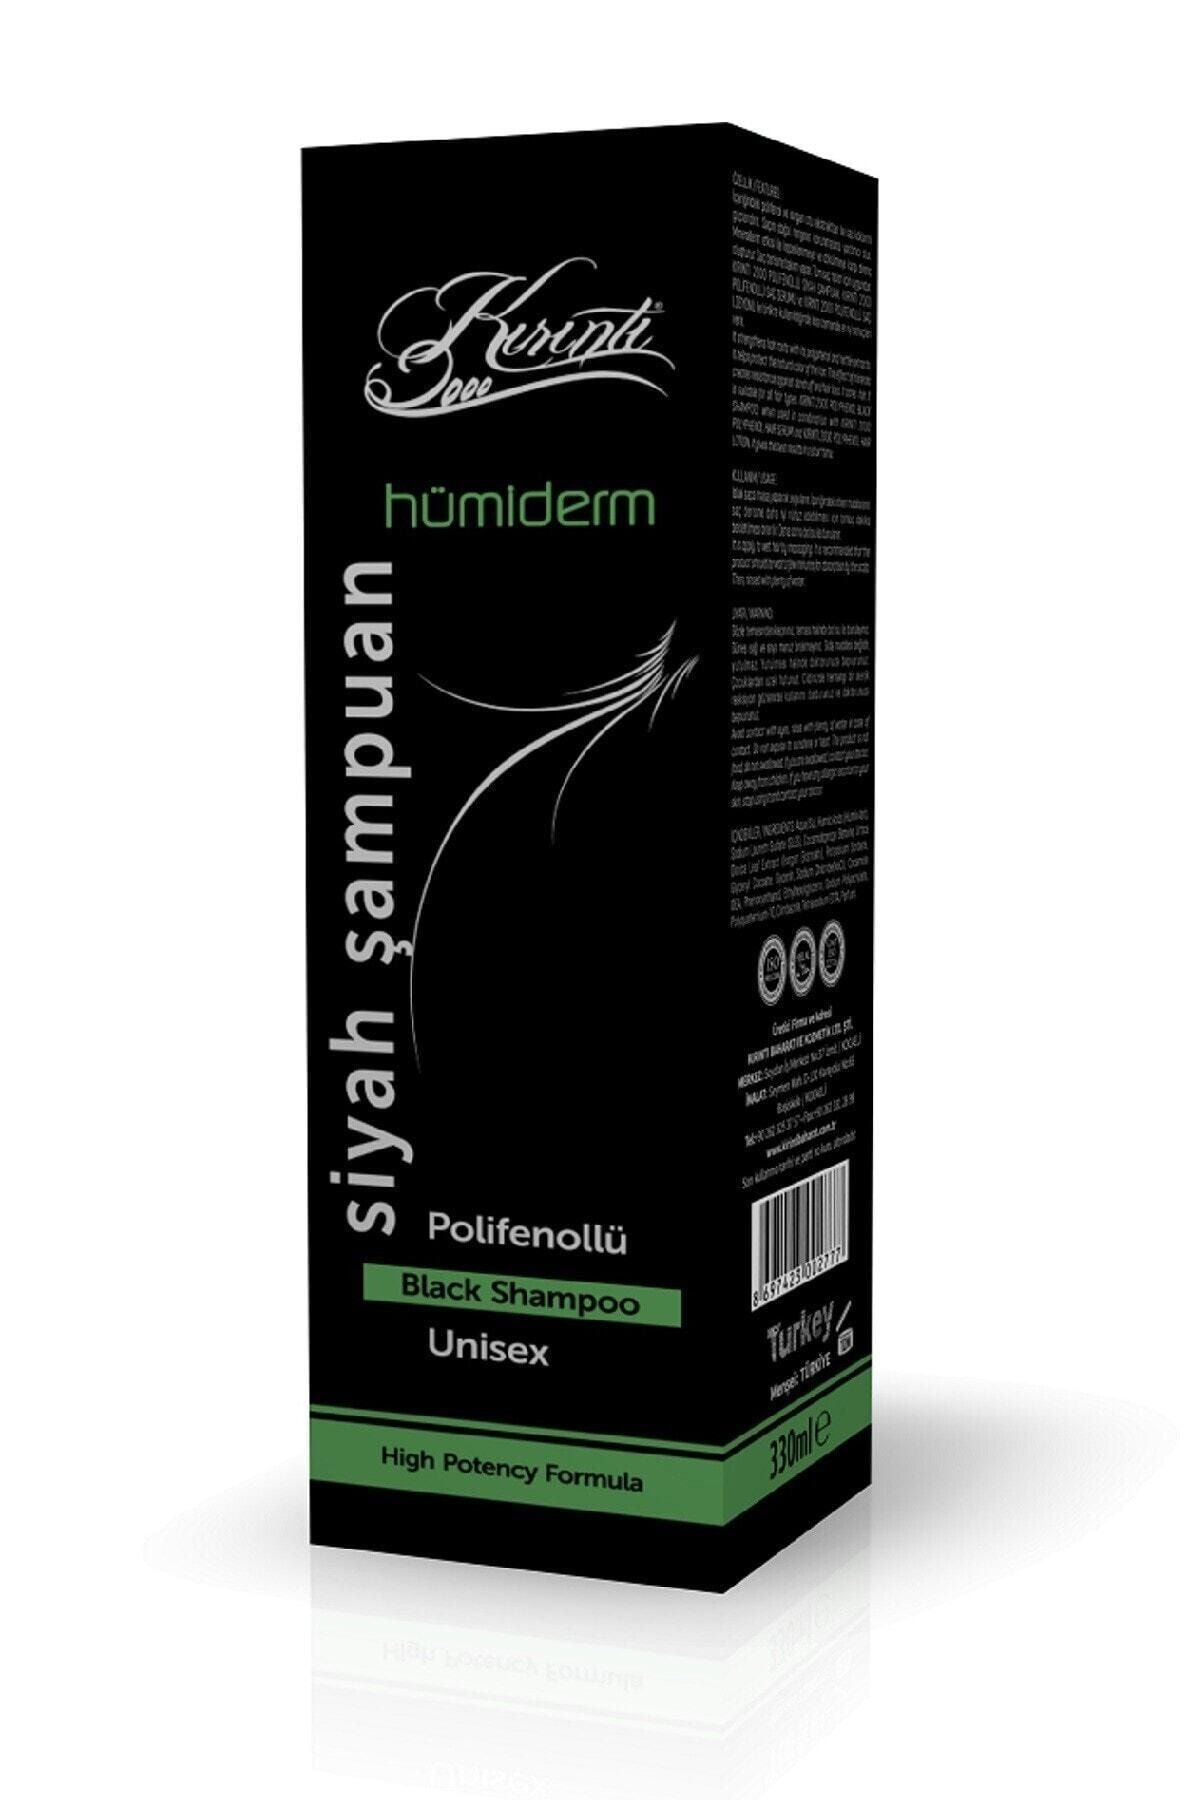 KIRINTI 2000 Polifenollü Hümiderm Siyah Şampuan 330 ml